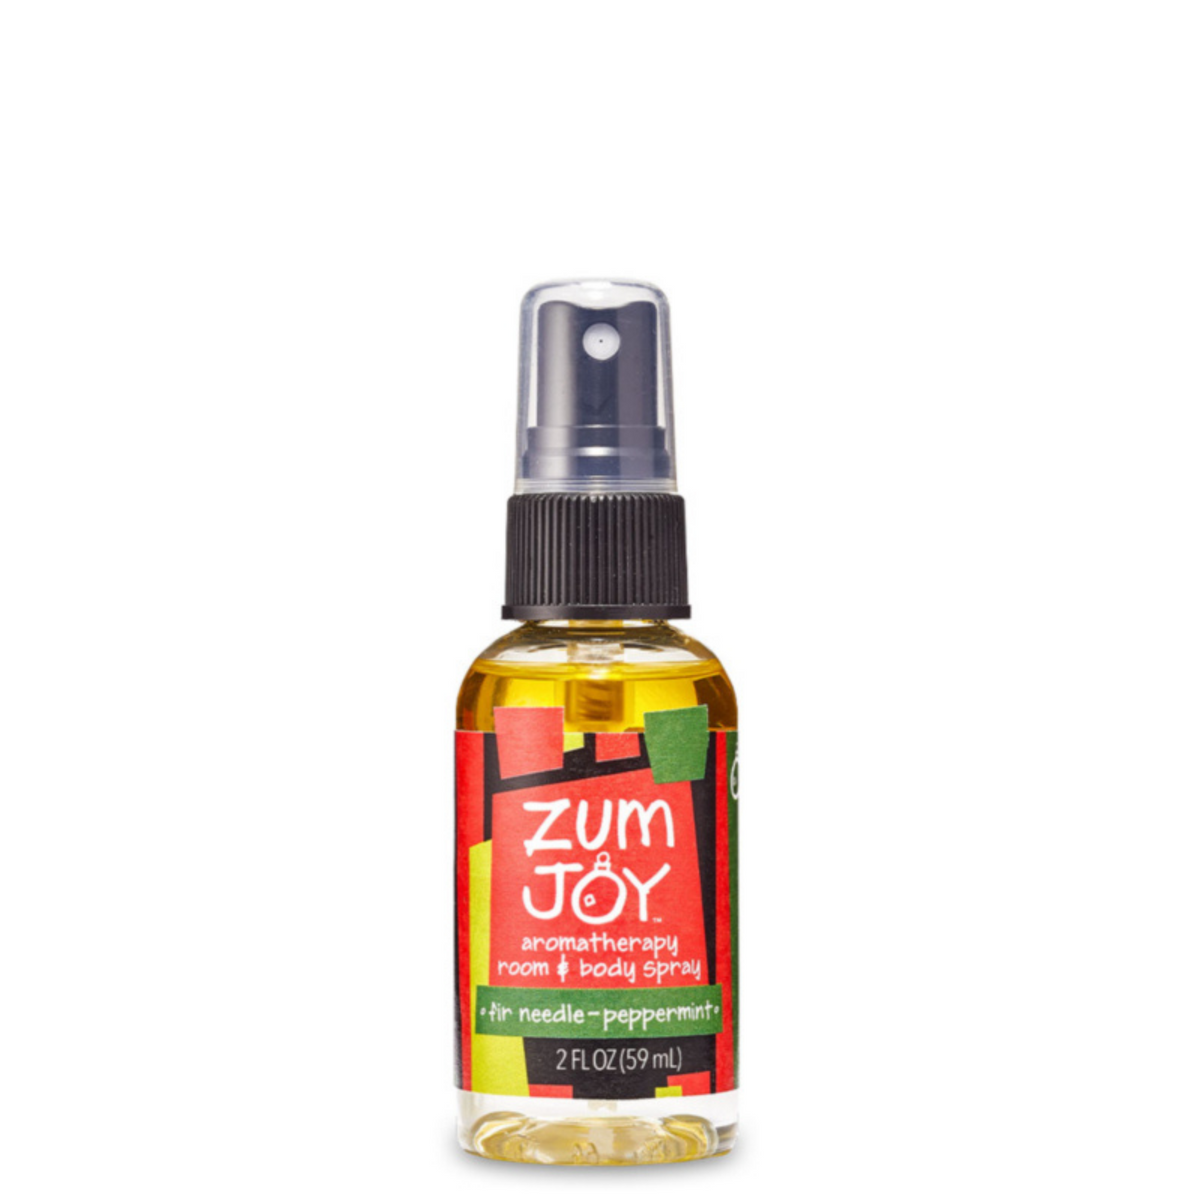 Primary Image of Zum Joy Mini Mist Fir Needle-Peppermint